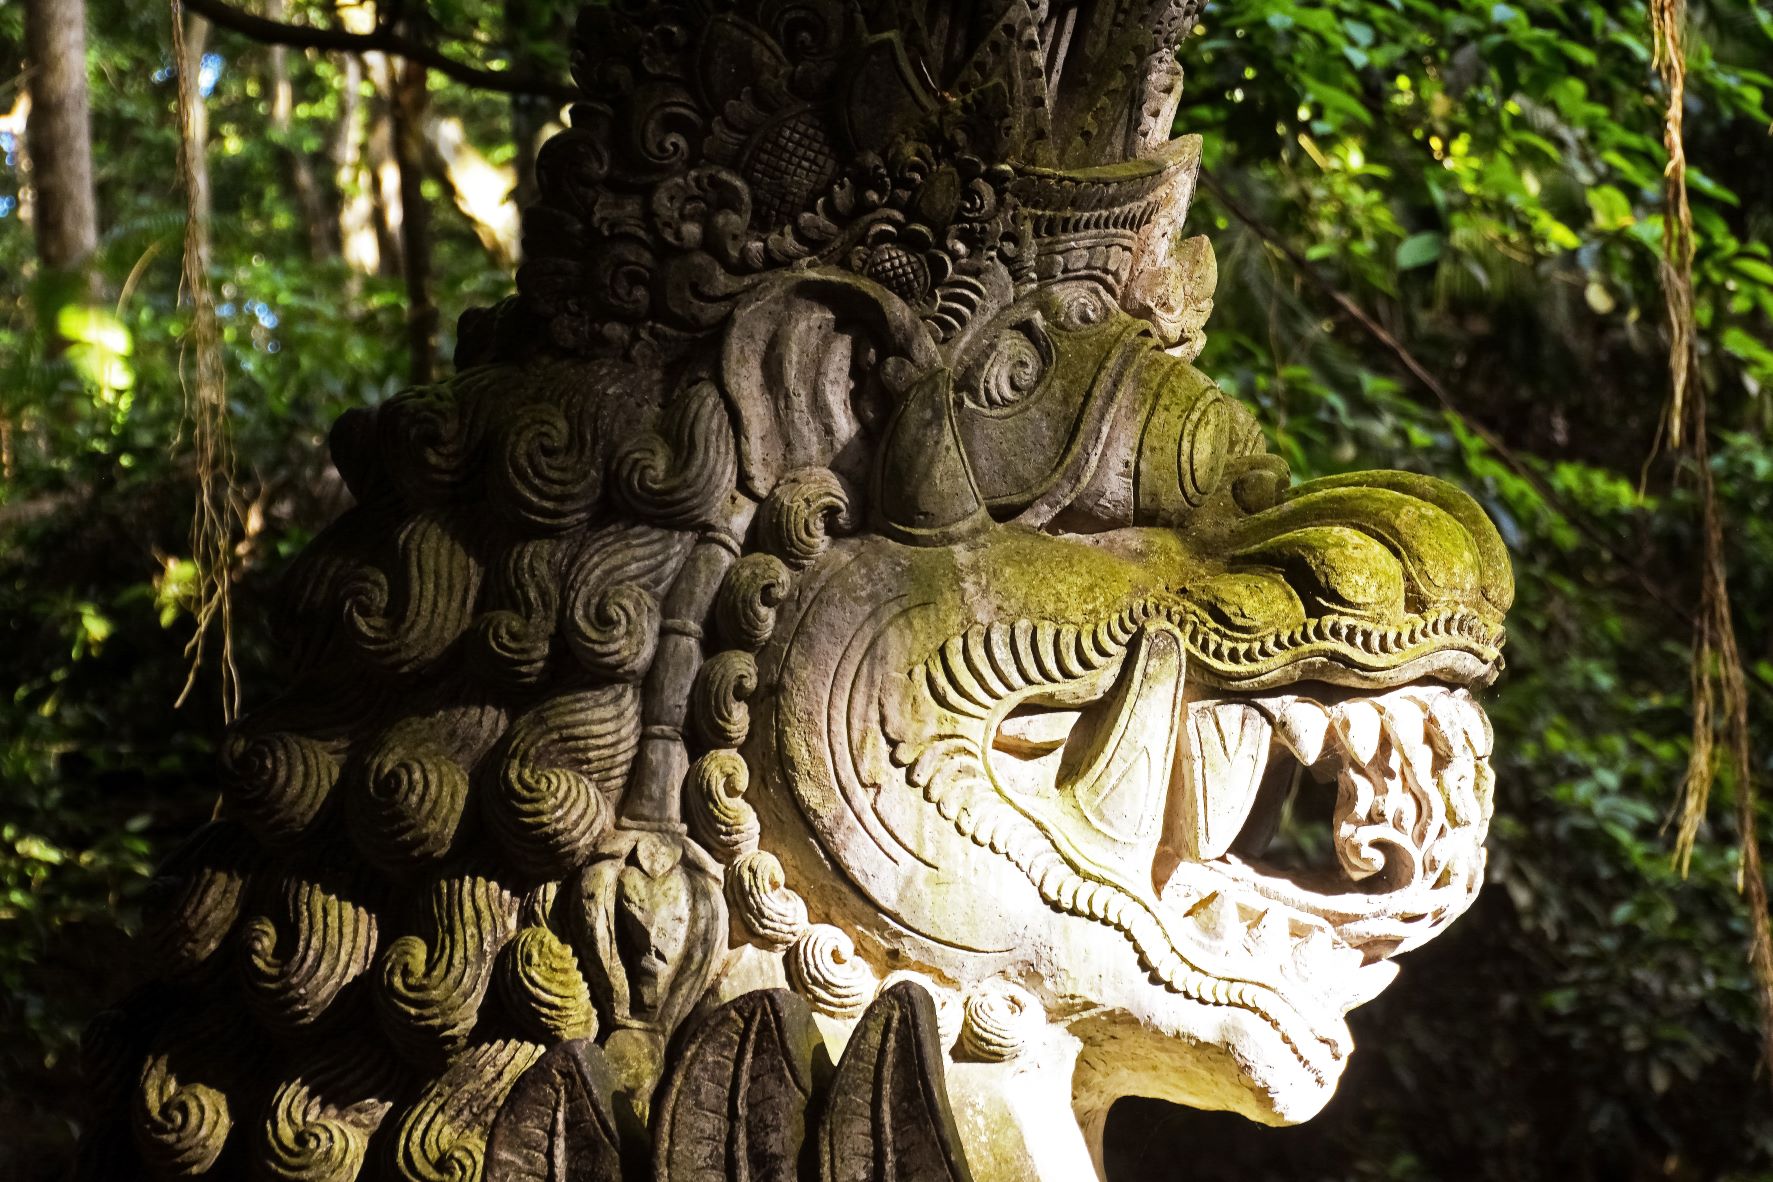 Ancient Statue in Jungle - Photo by Jeremy Bezanger on Unsplash